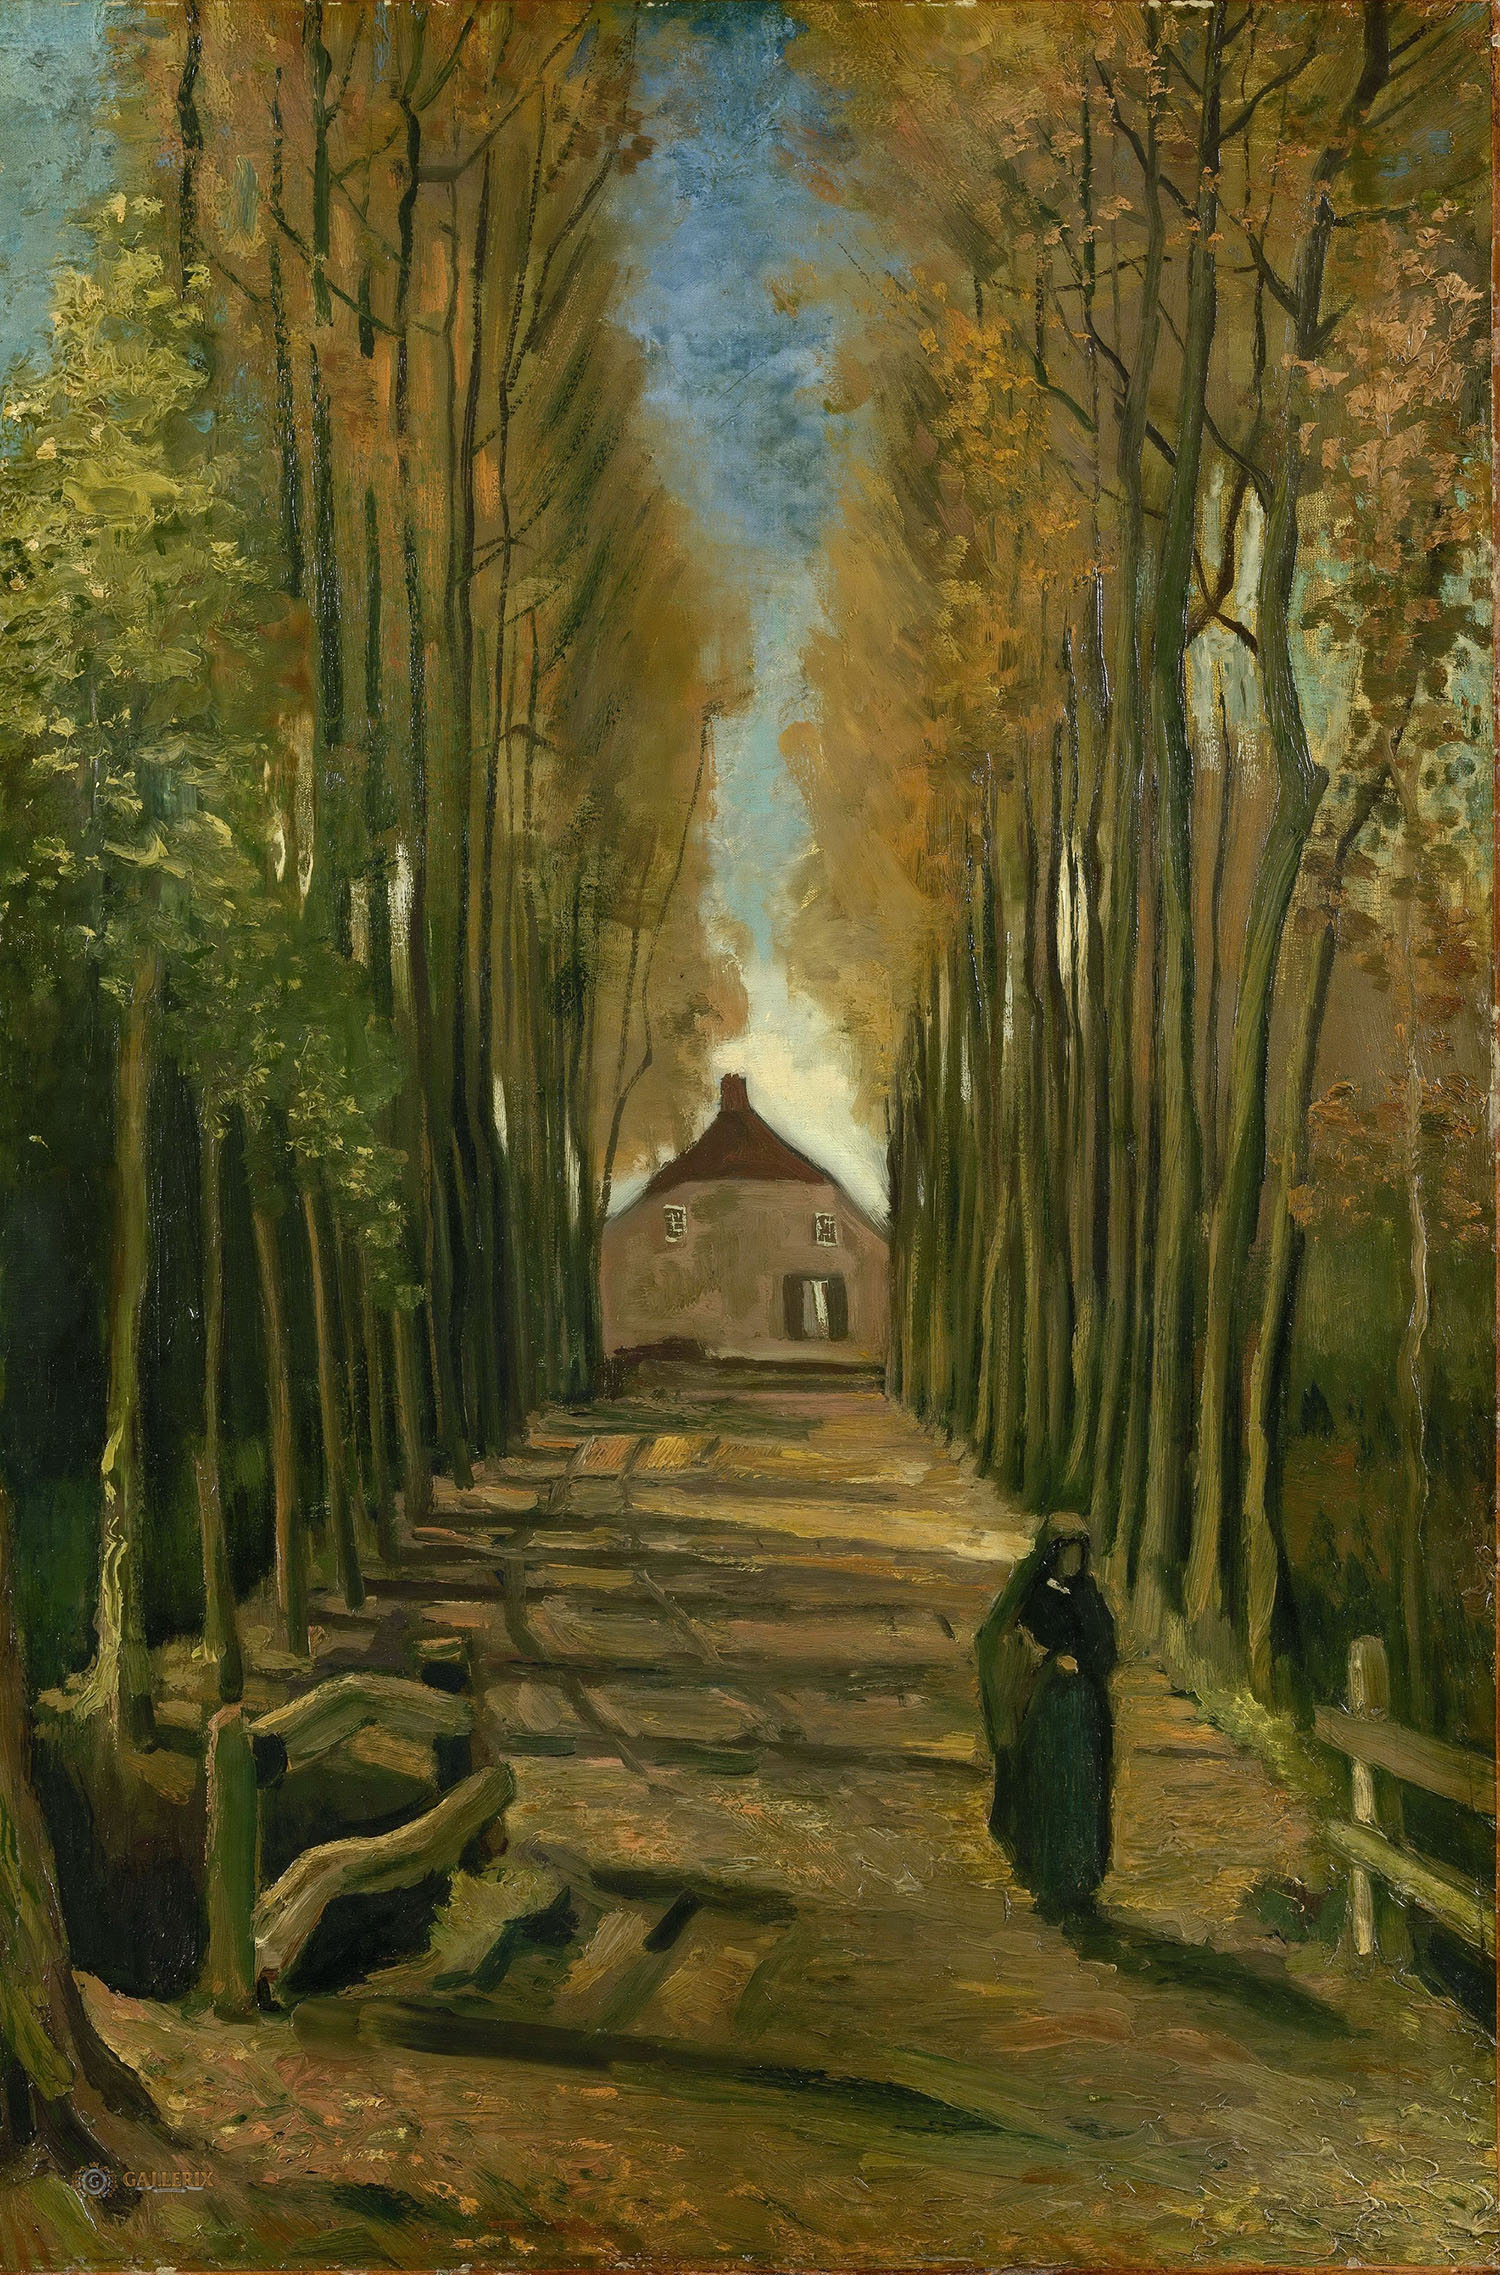 Винсент Ван Гог. "Тополиная аллея осенью". 1884. музей Ван Гога, Амстердам.